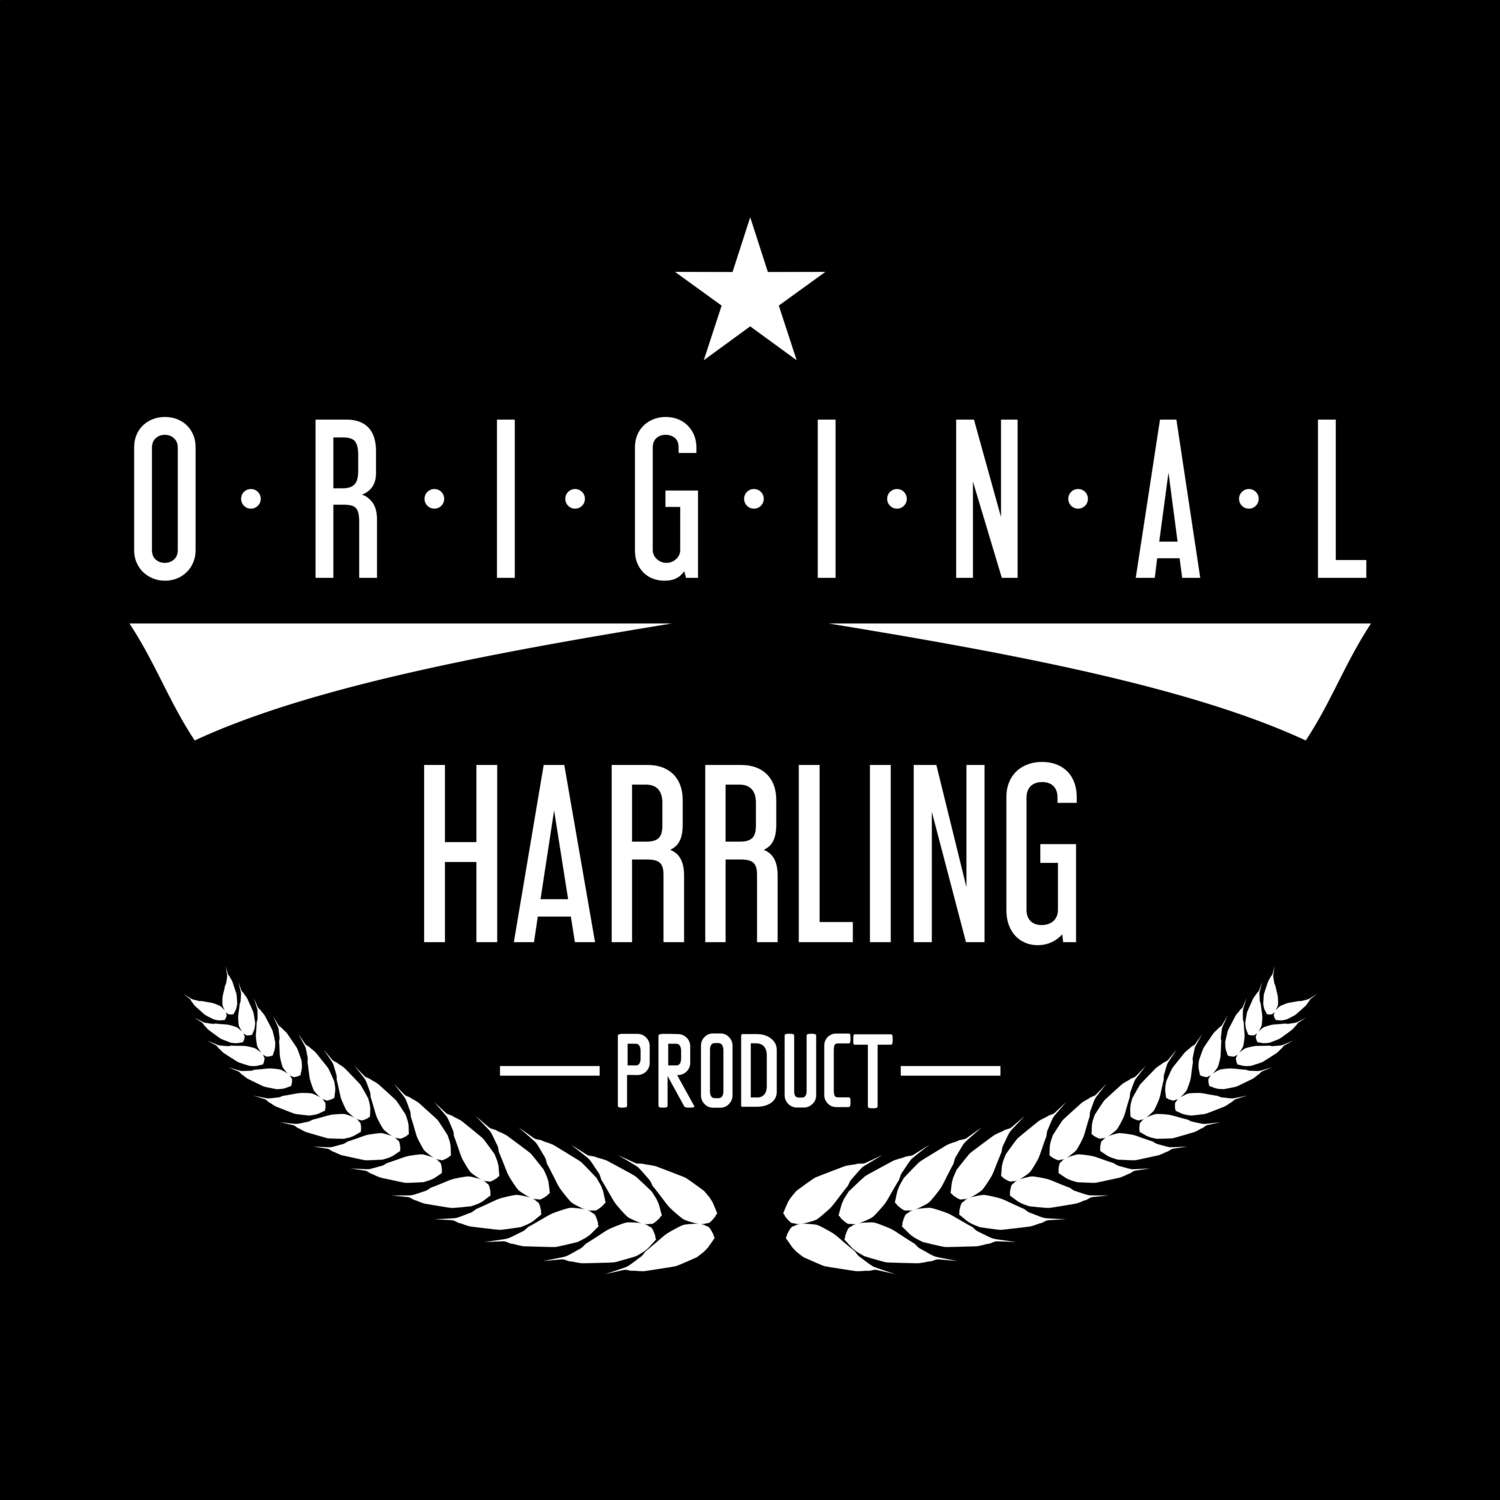 Harrling T-Shirt »Original Product«